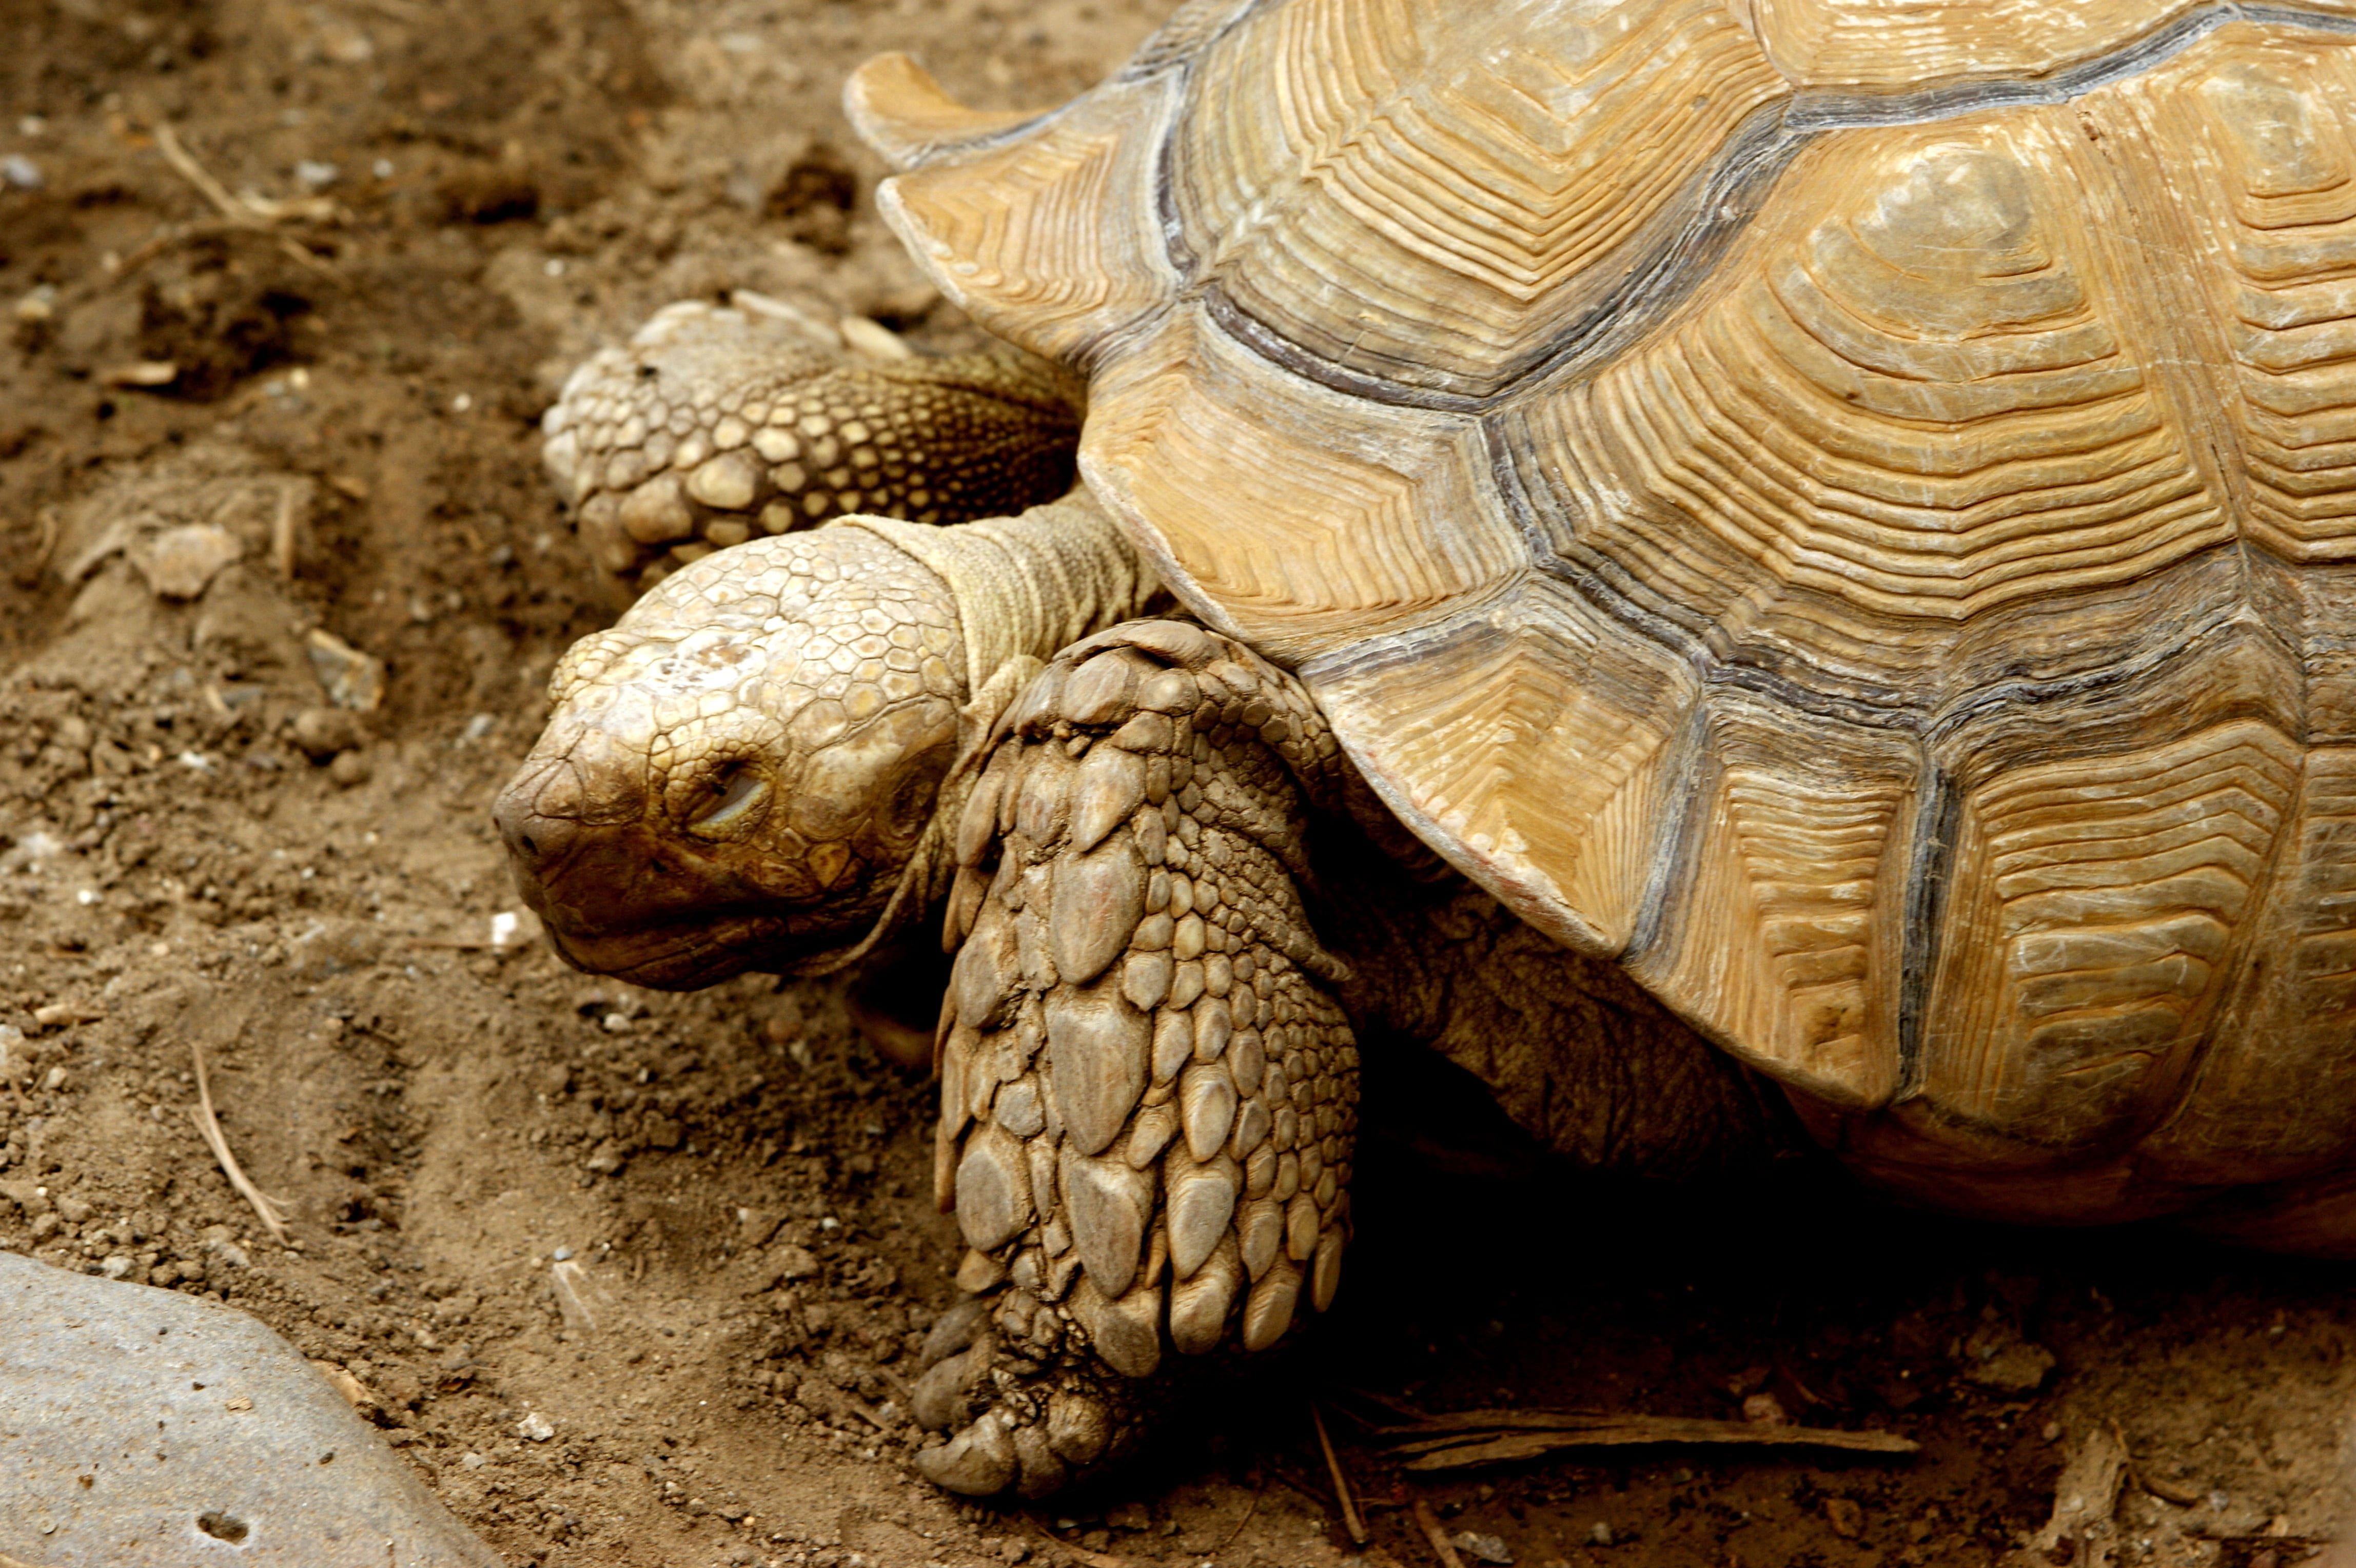 tortoise, reptiles, exoskeleton, nature, wildlife, animals